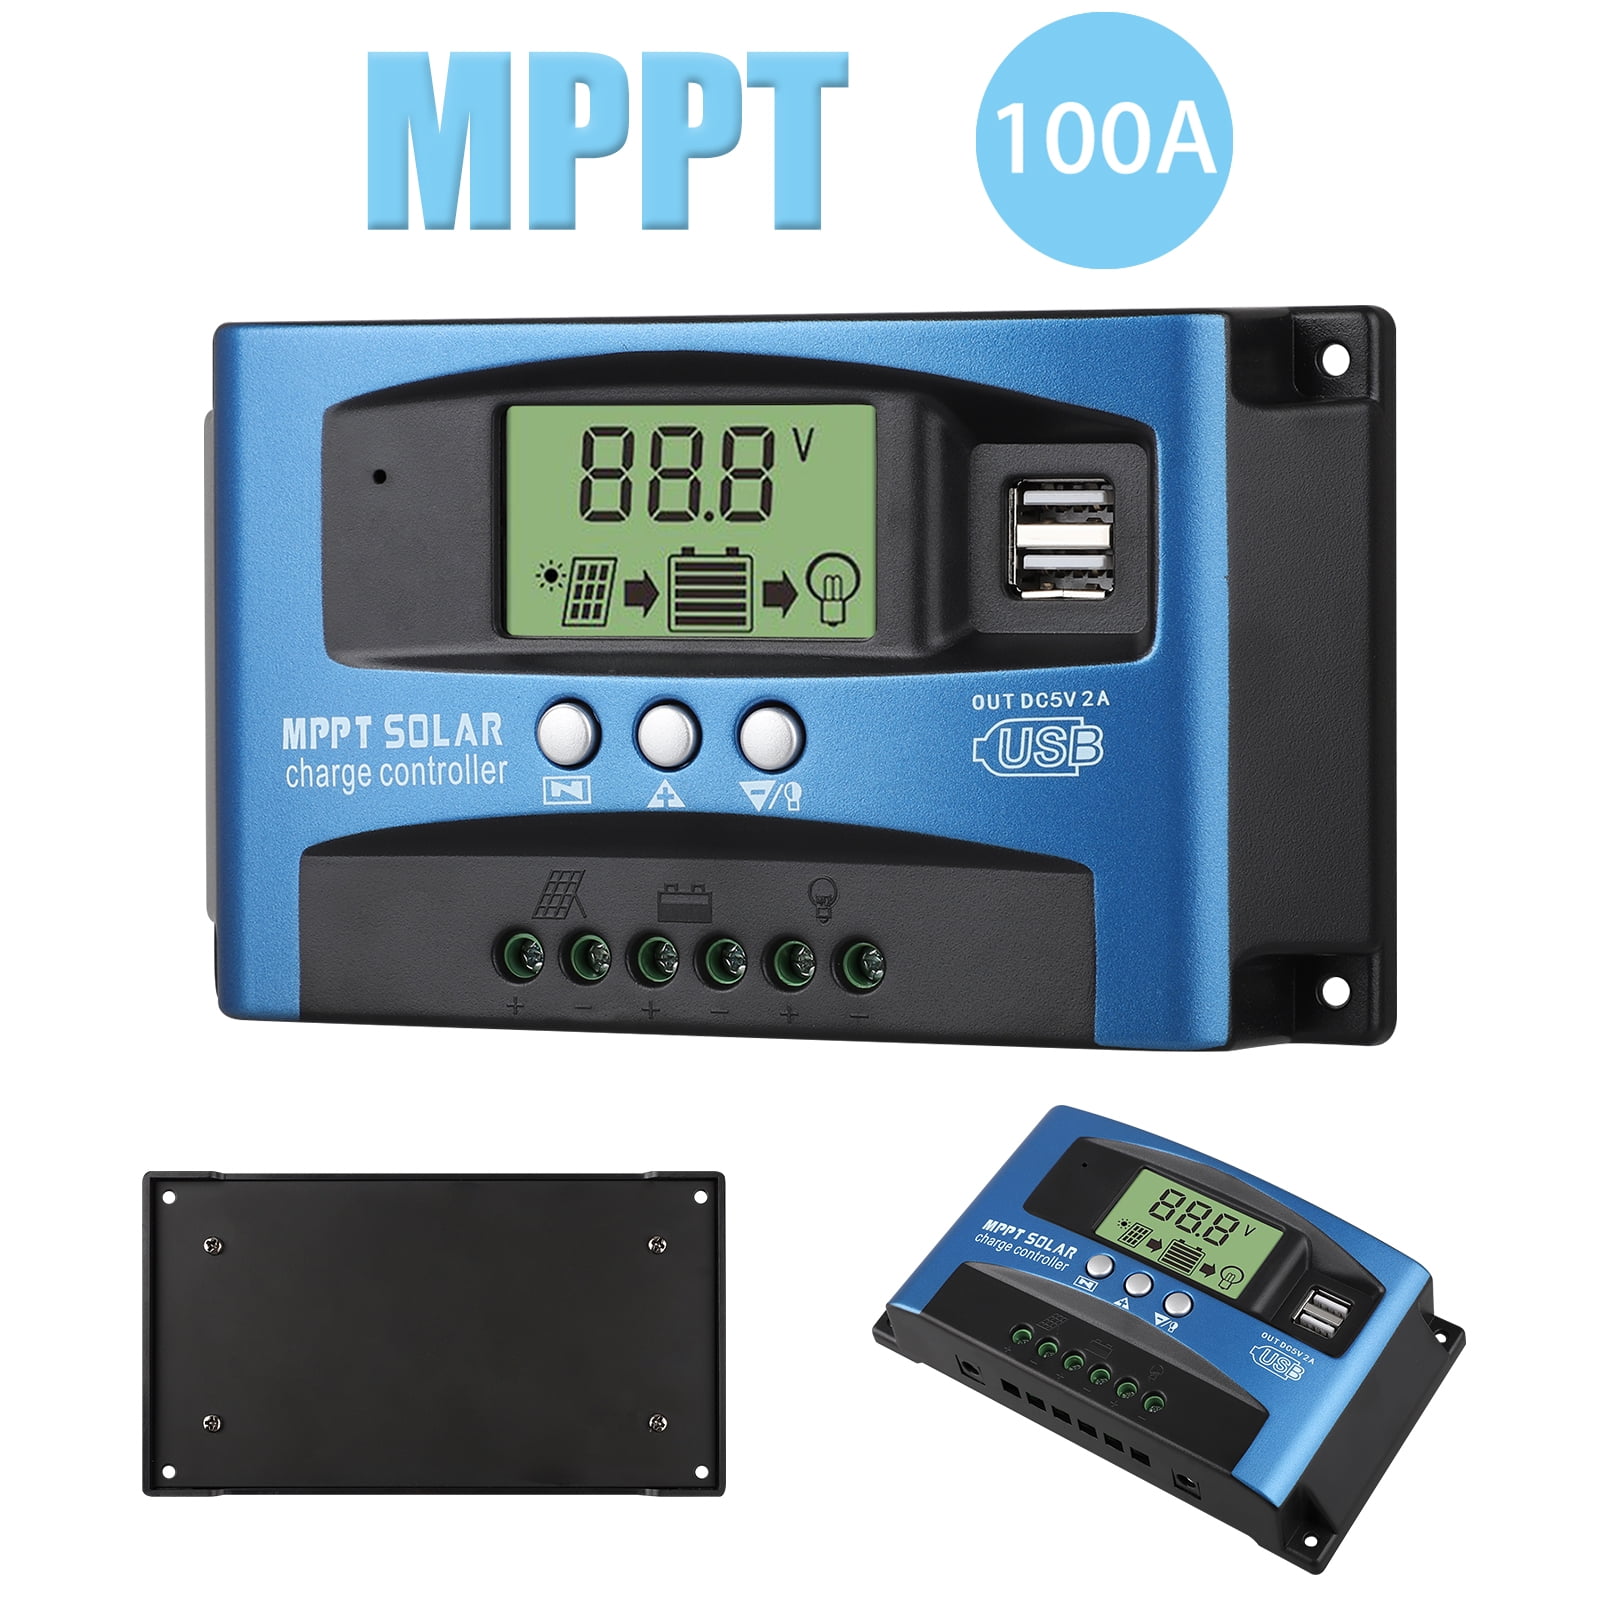 MPPT 100A Solar Panel Regulator Charge Controller Auto Focus 12V/24V Dual USB